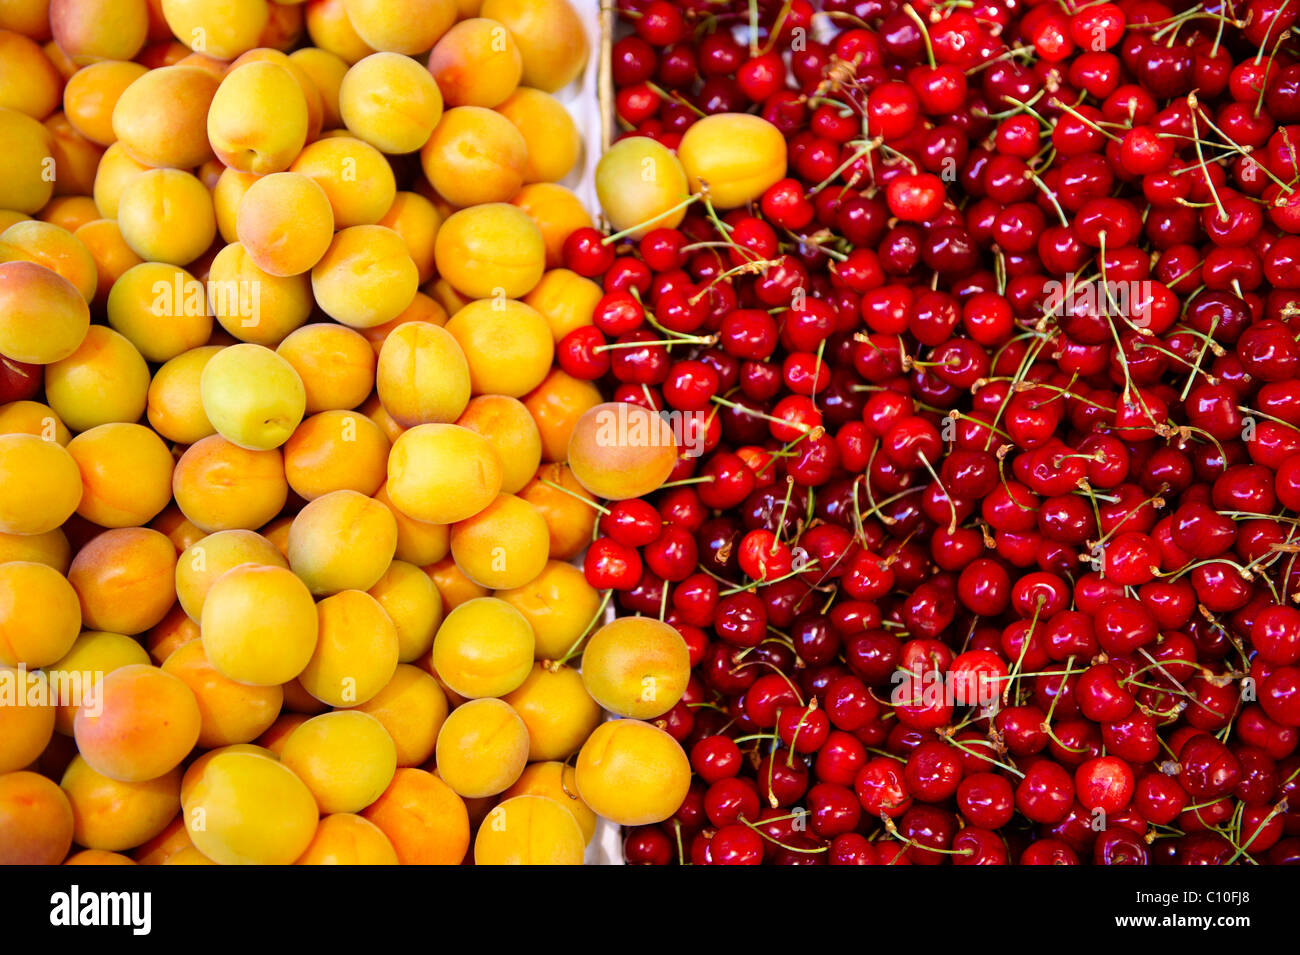 Fresh peaches, apricots & cherries on a fruit market stall, Syros, Greece Stock Photo